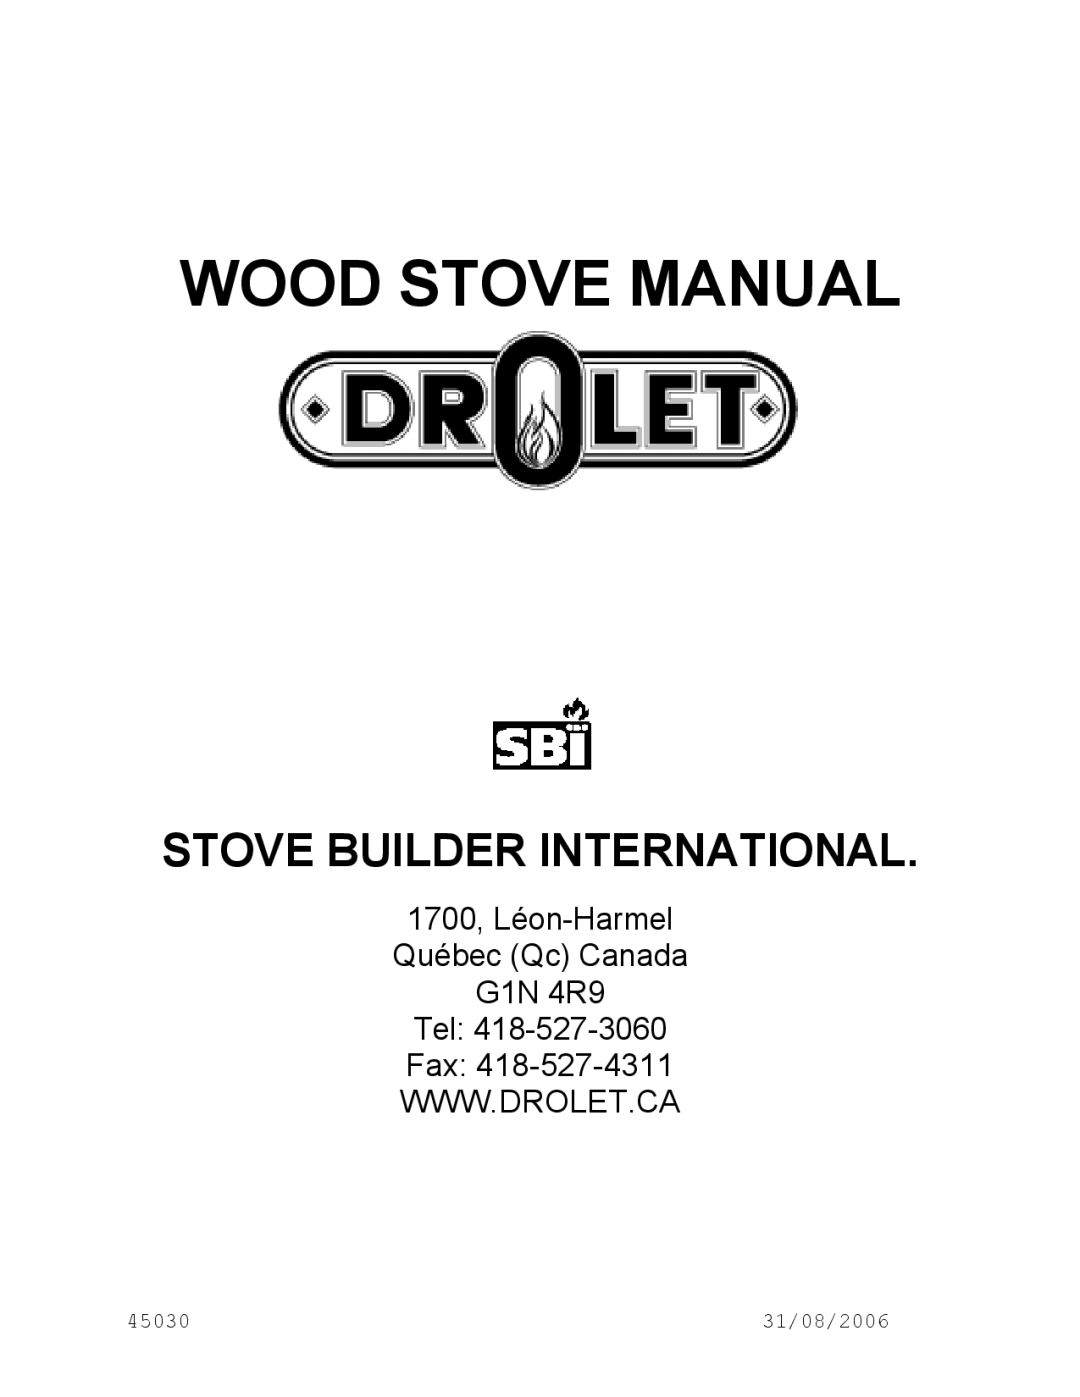 Drolet manual Wood Stove Manual 